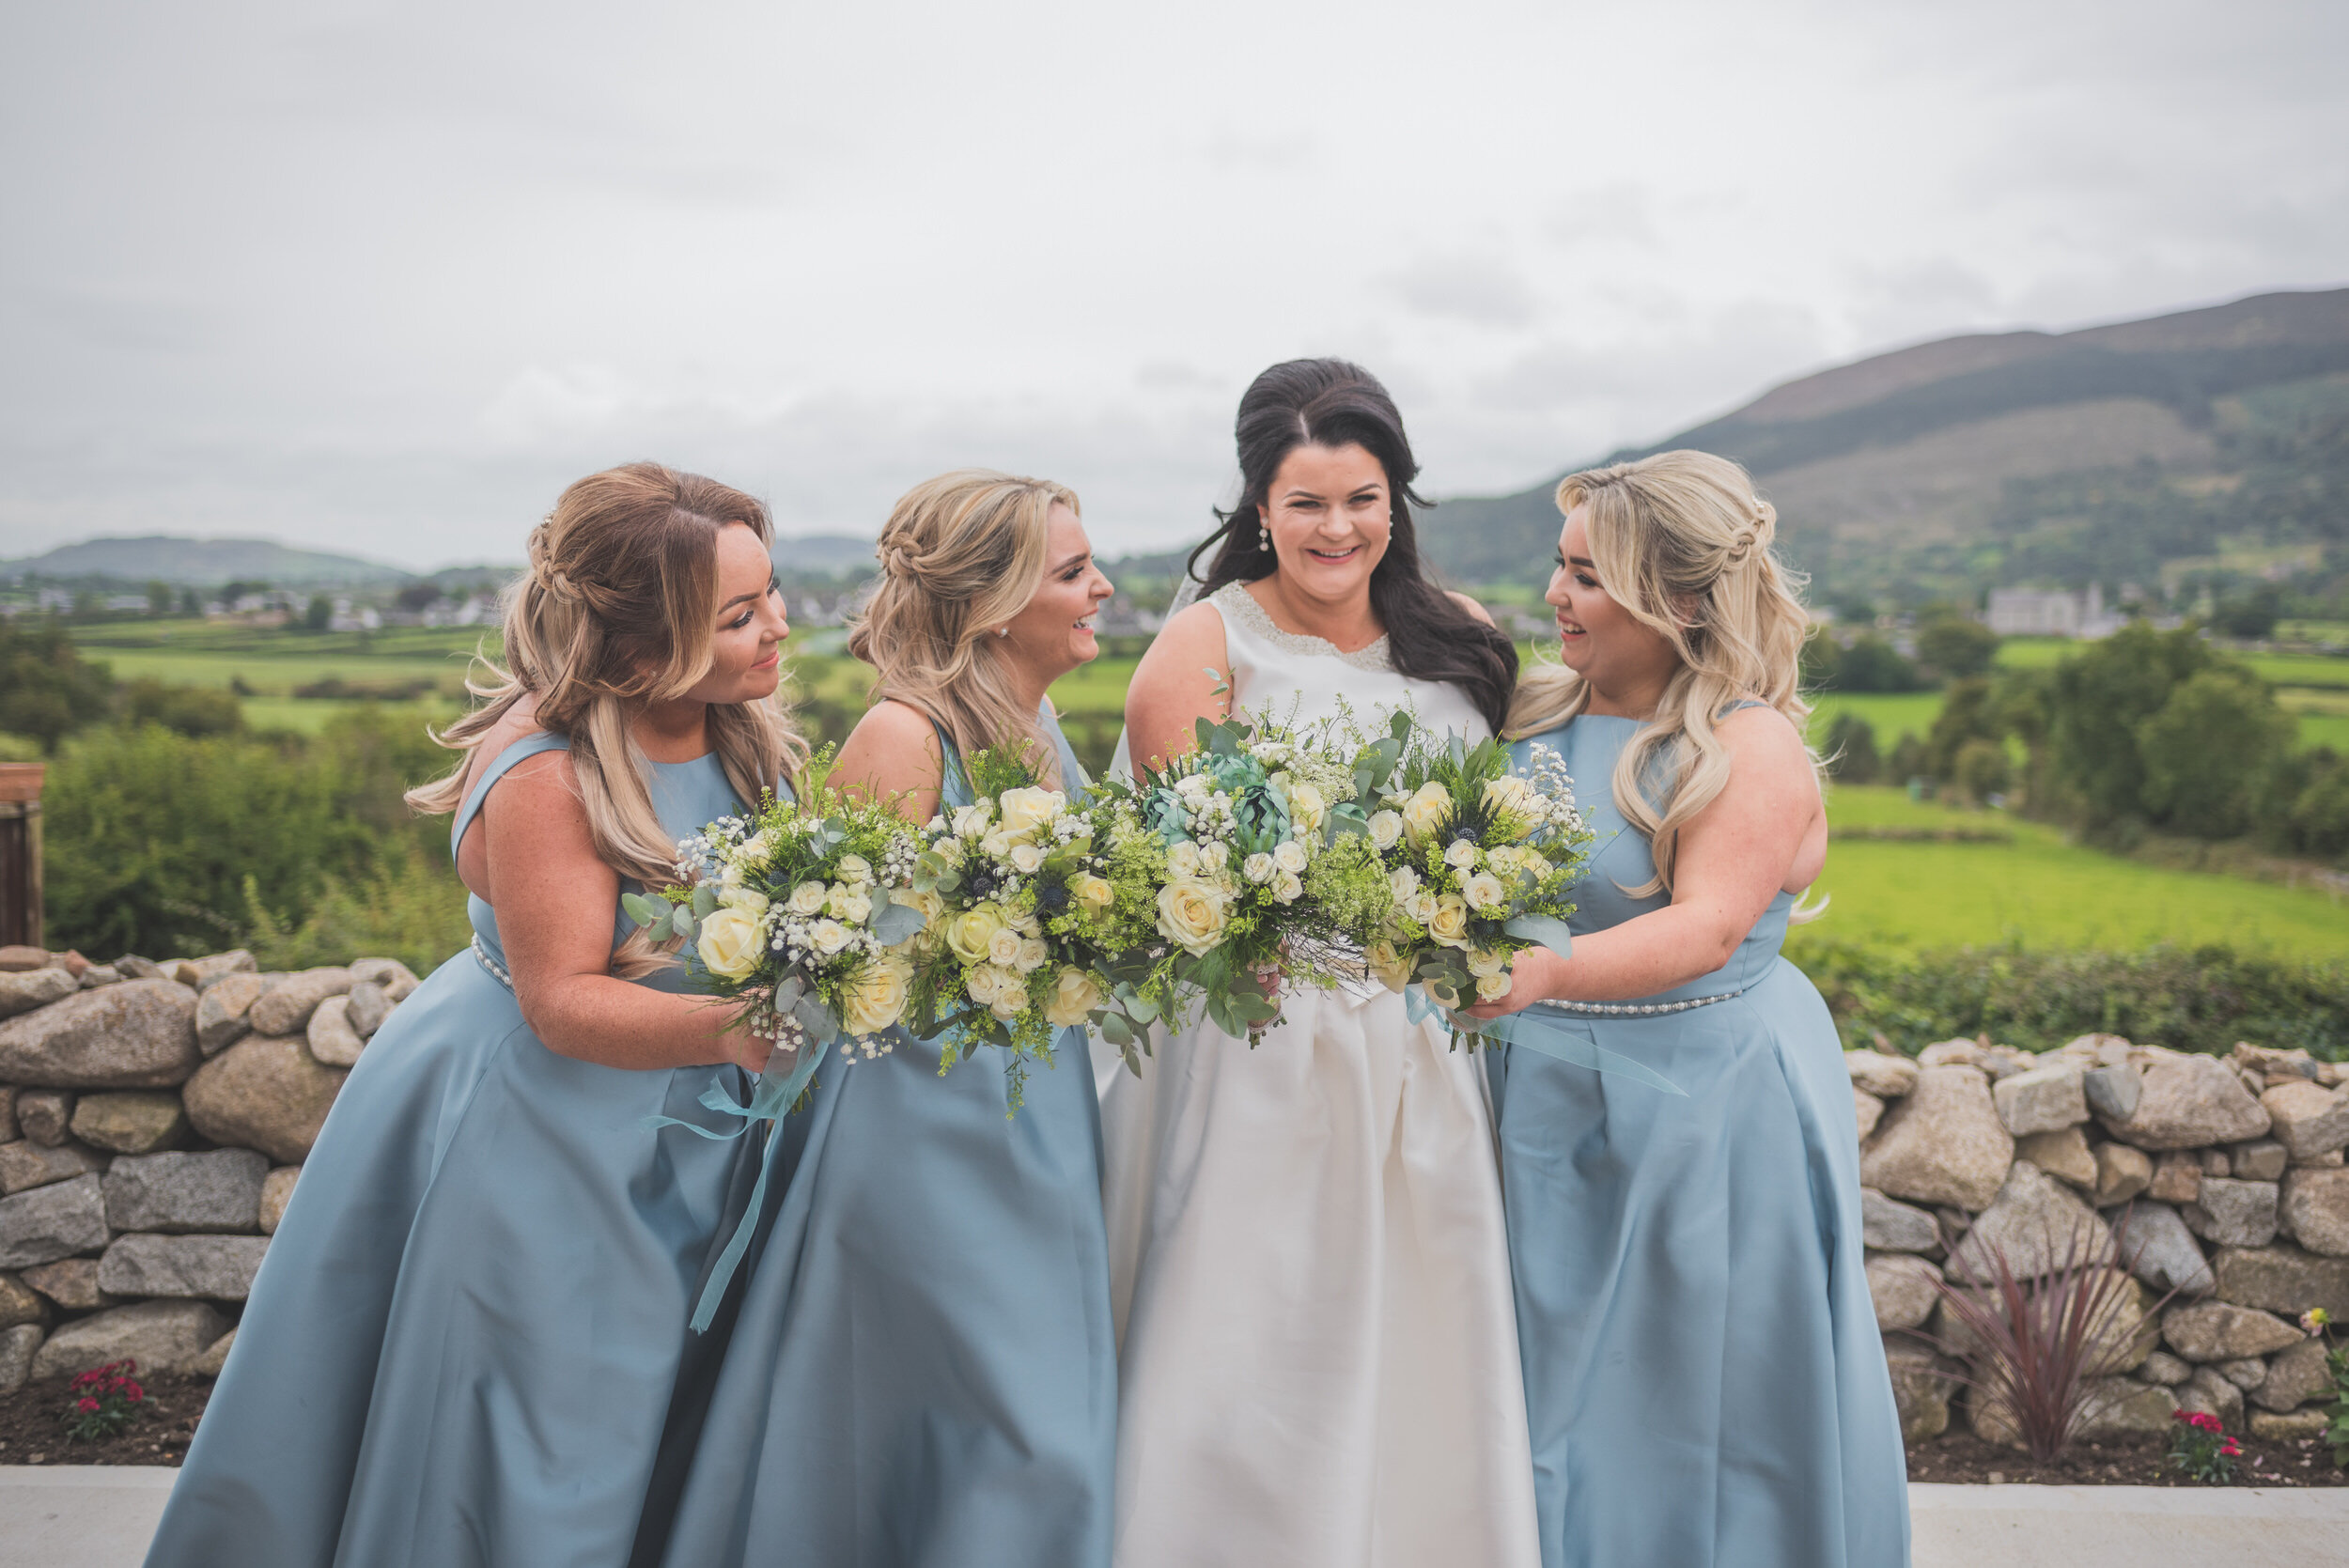 Northern Ireland Wedding Photographer NI County Antrim carrickdale newry dundalk armagh down louth meigh bridemaids.jpg